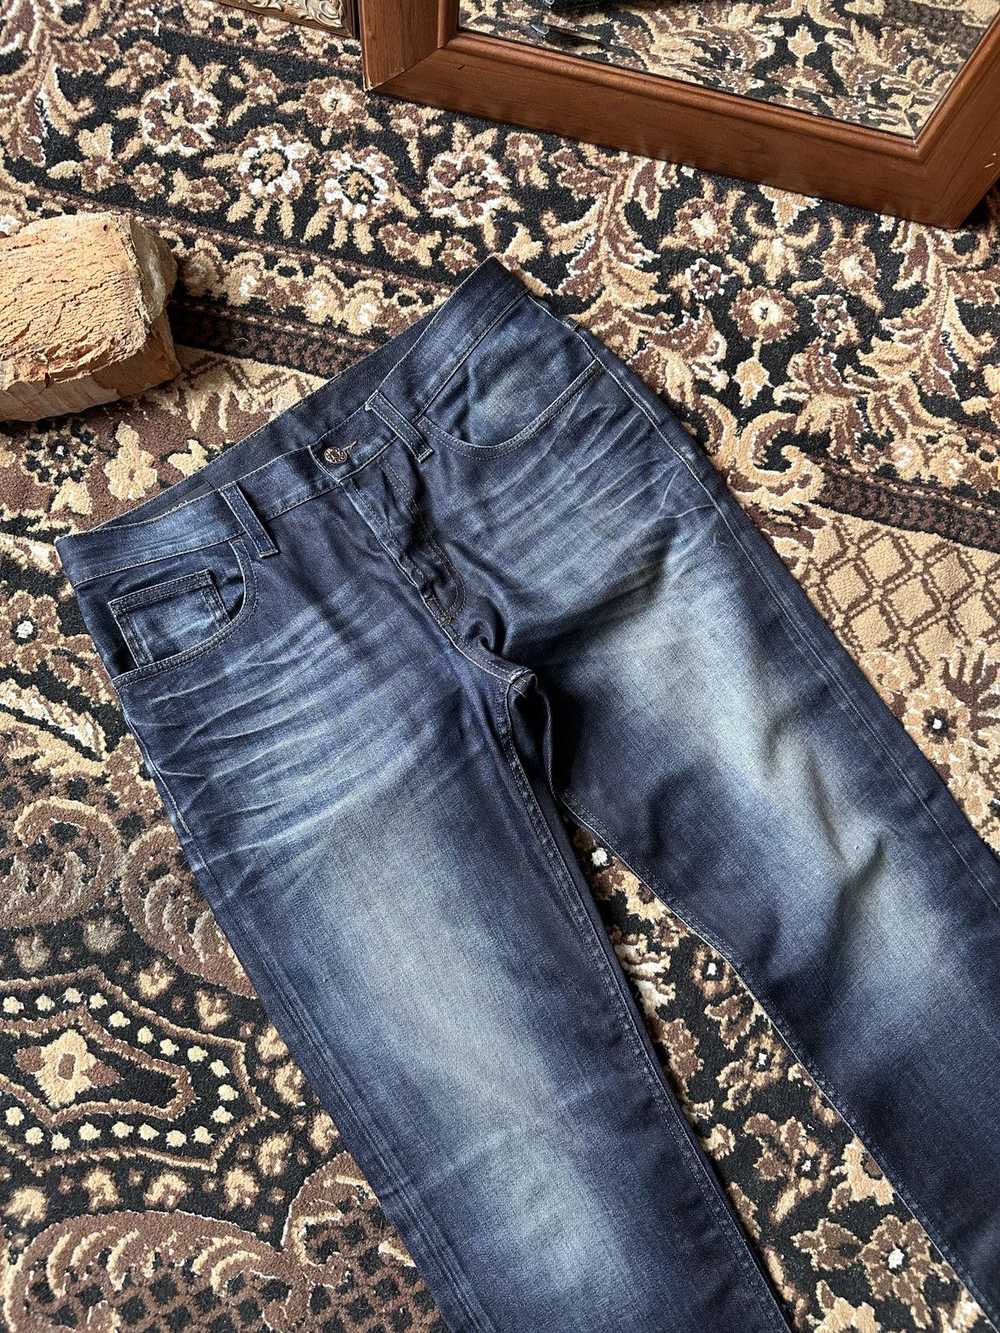 Gucci GUCCI denim LEATHER Logo Jeans Pants - image 8